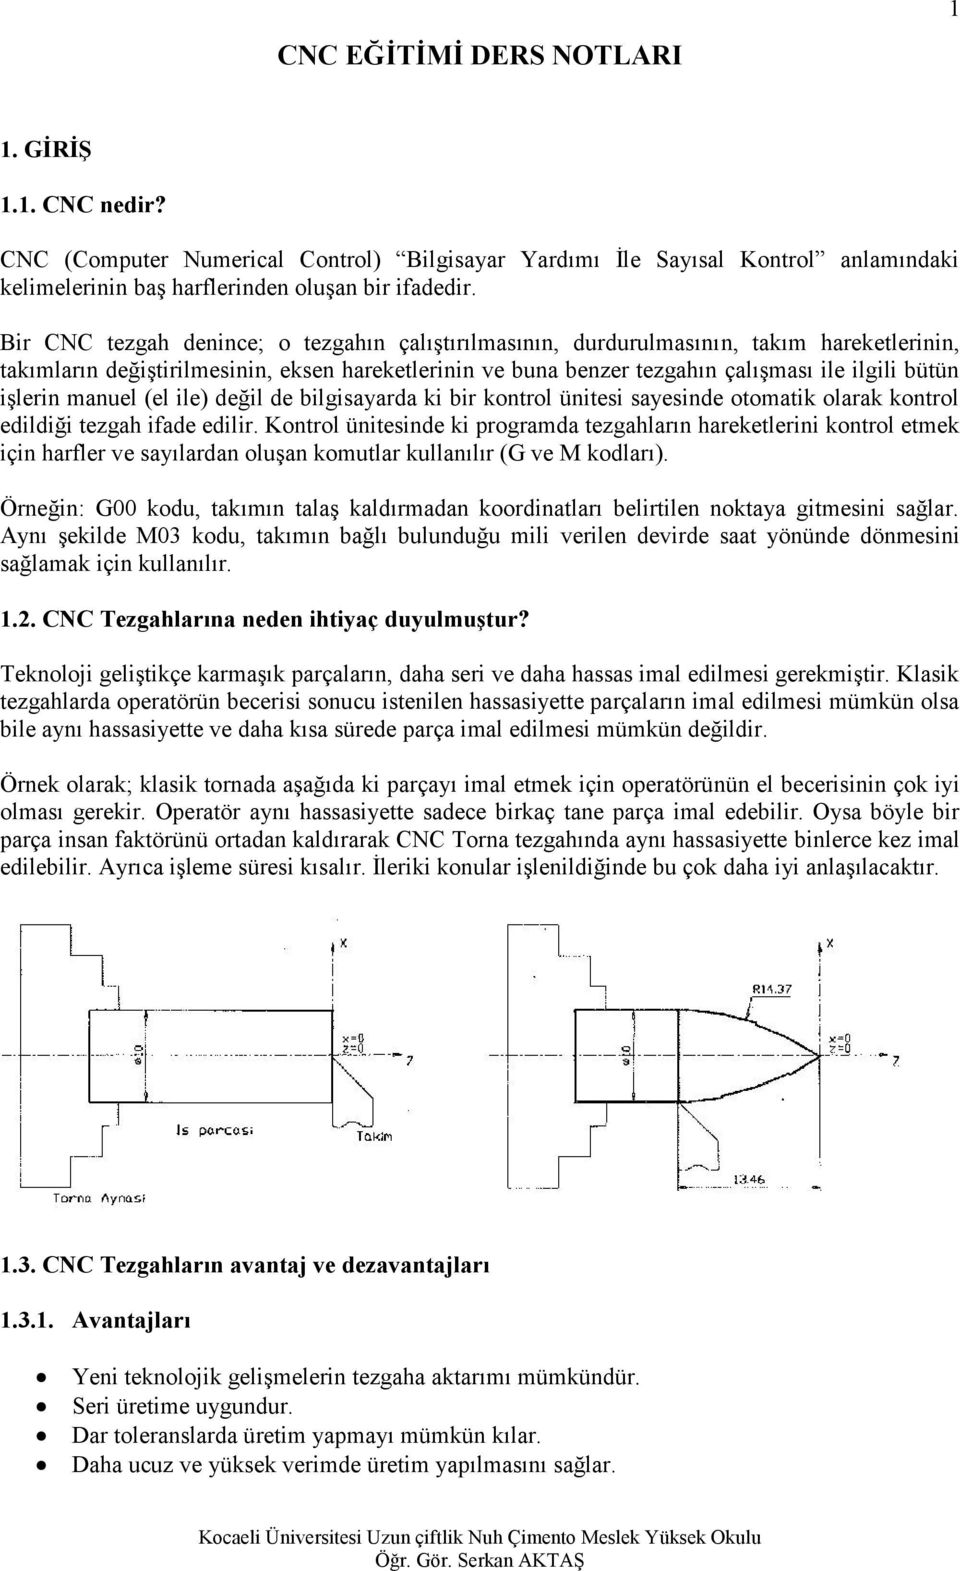 CNC EĞİTİMİ DERS NOTLARI - PDF Free Download